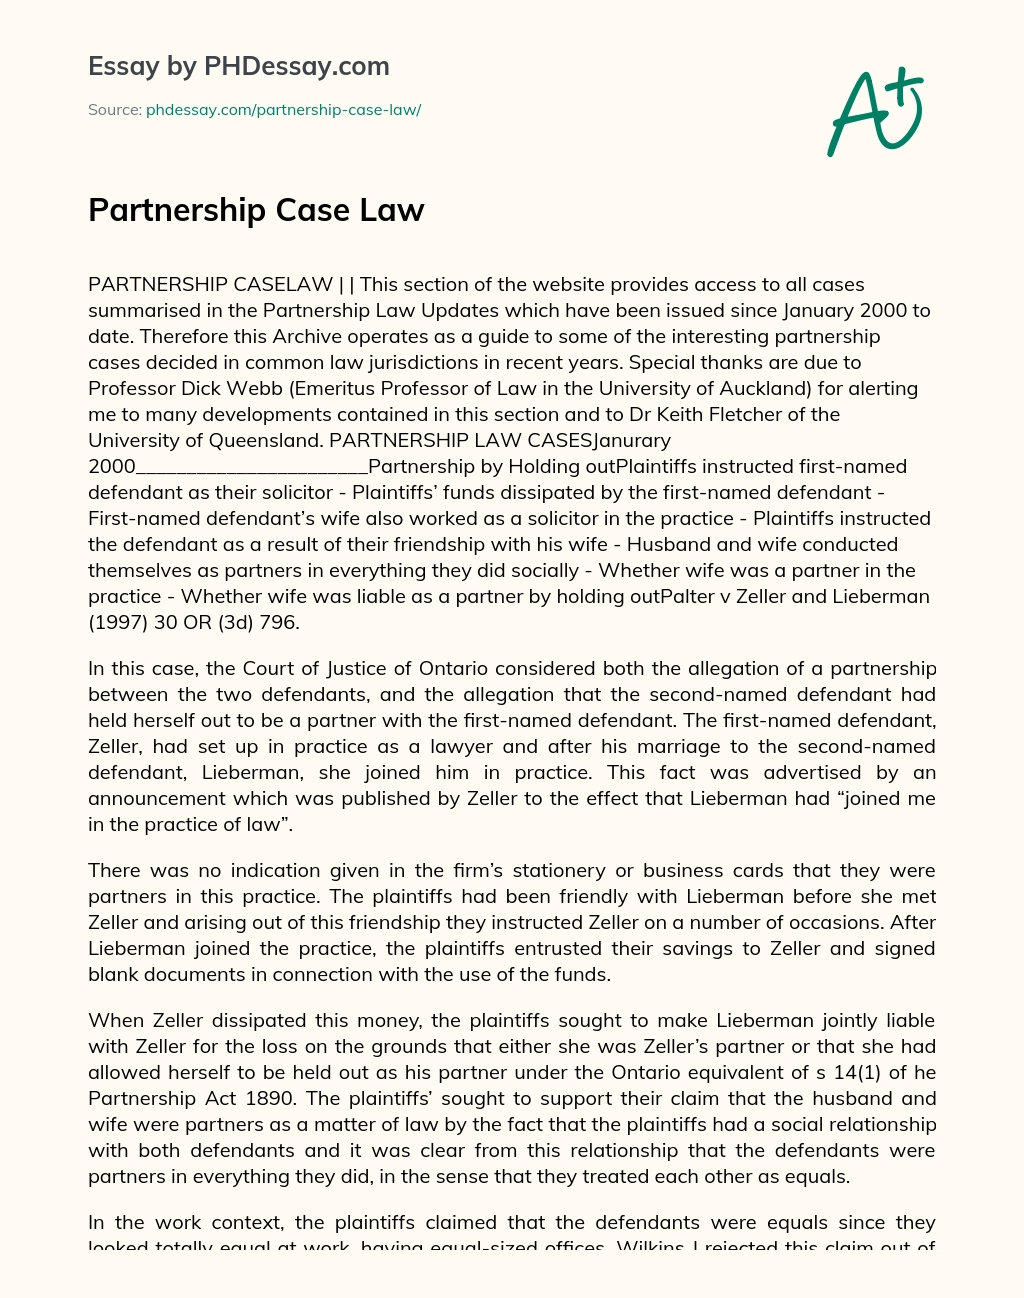 Partnership Case Law essay